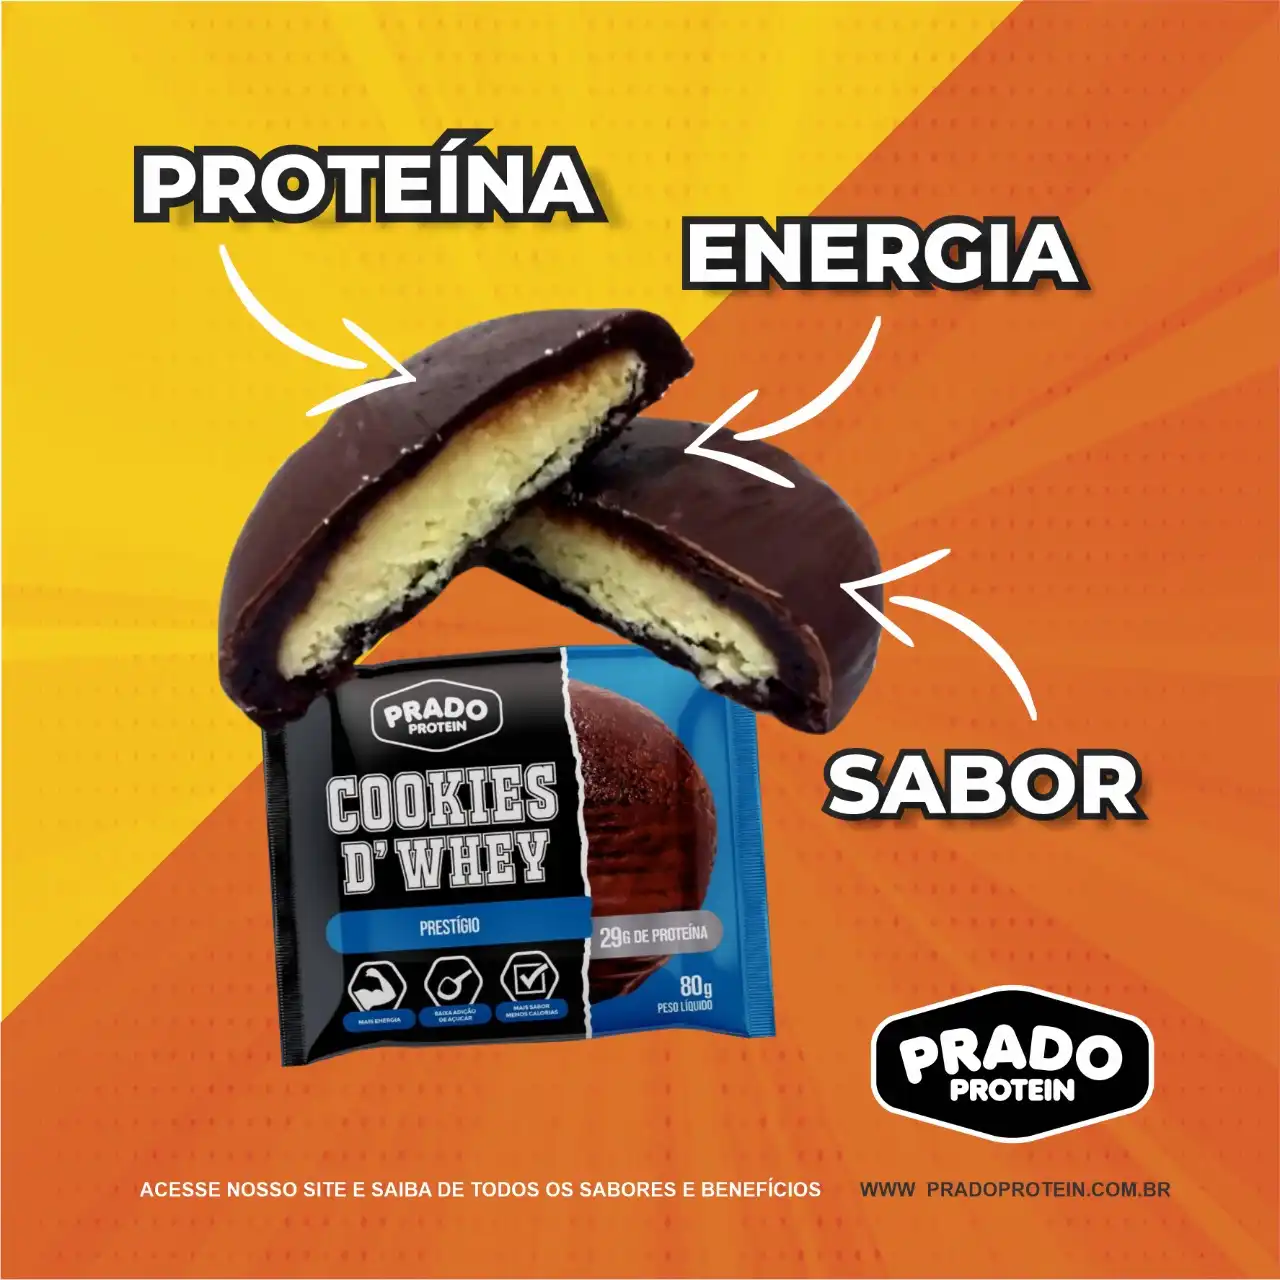 
Propaganda Post Infográfico Cookies de Whey Protein



